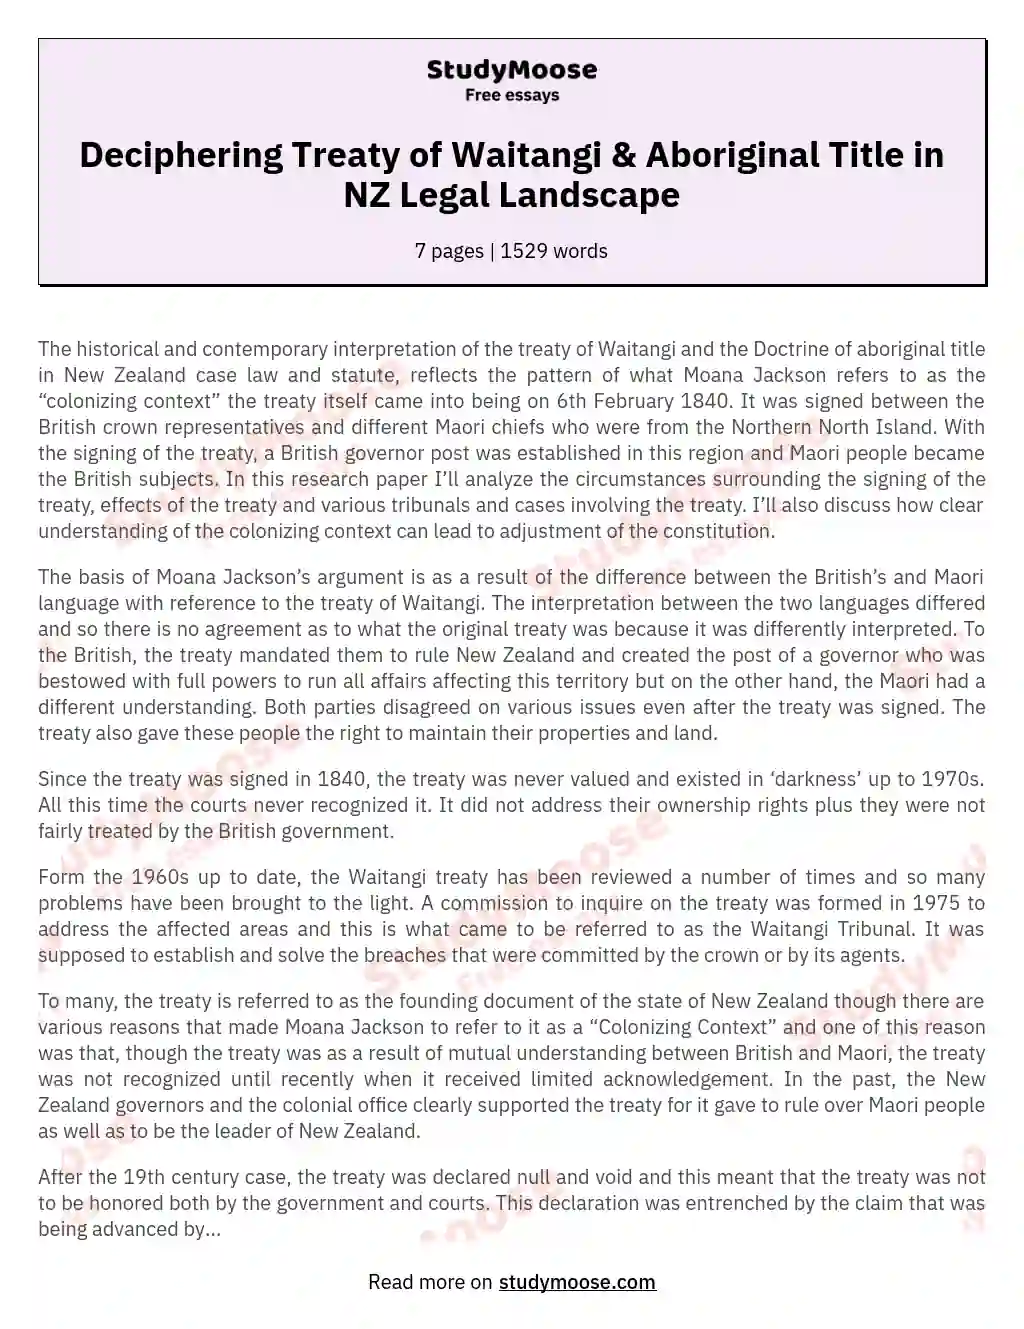 Deciphering Treaty of Waitangi & Aboriginal Title in NZ Legal Landscape essay